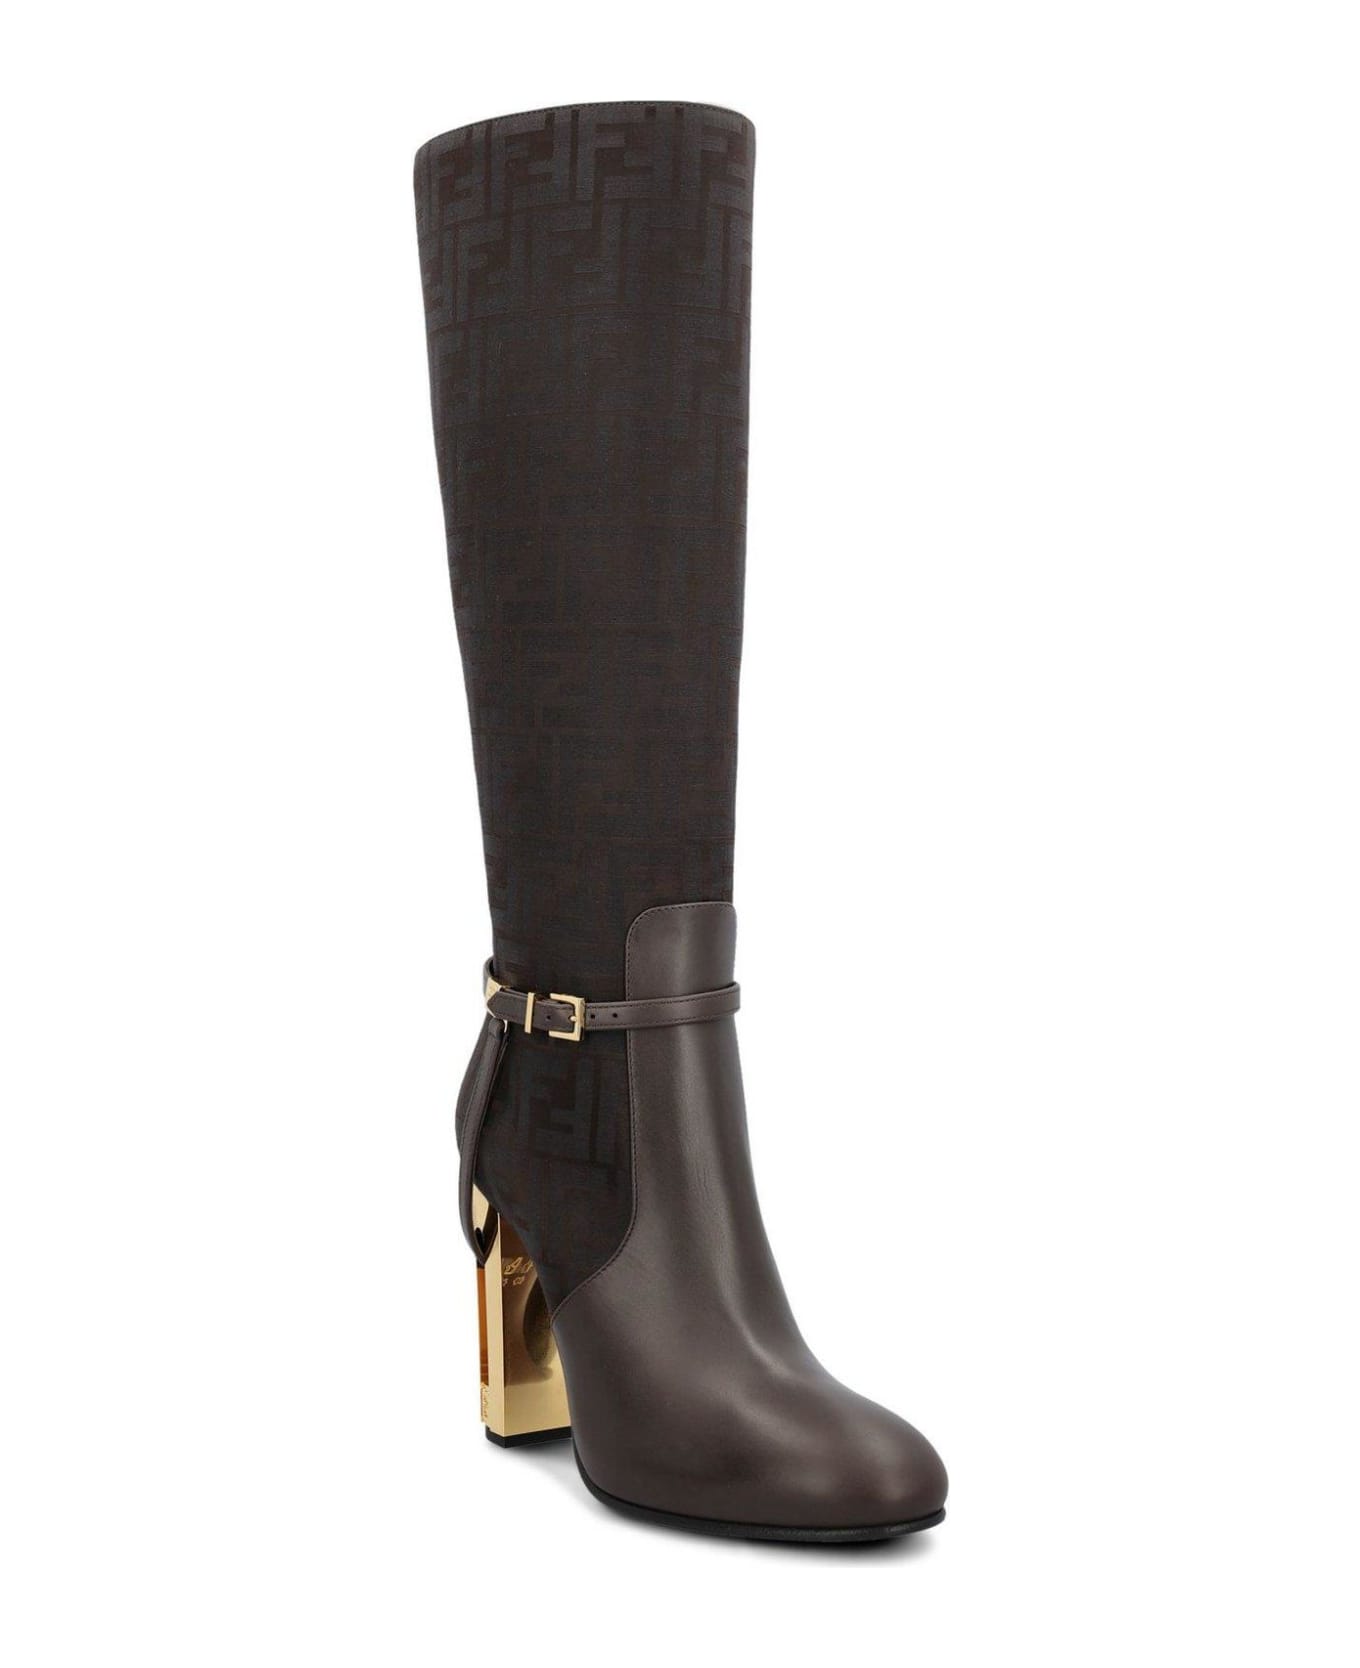 Fendi Delfina High Heeled Boots - Brown